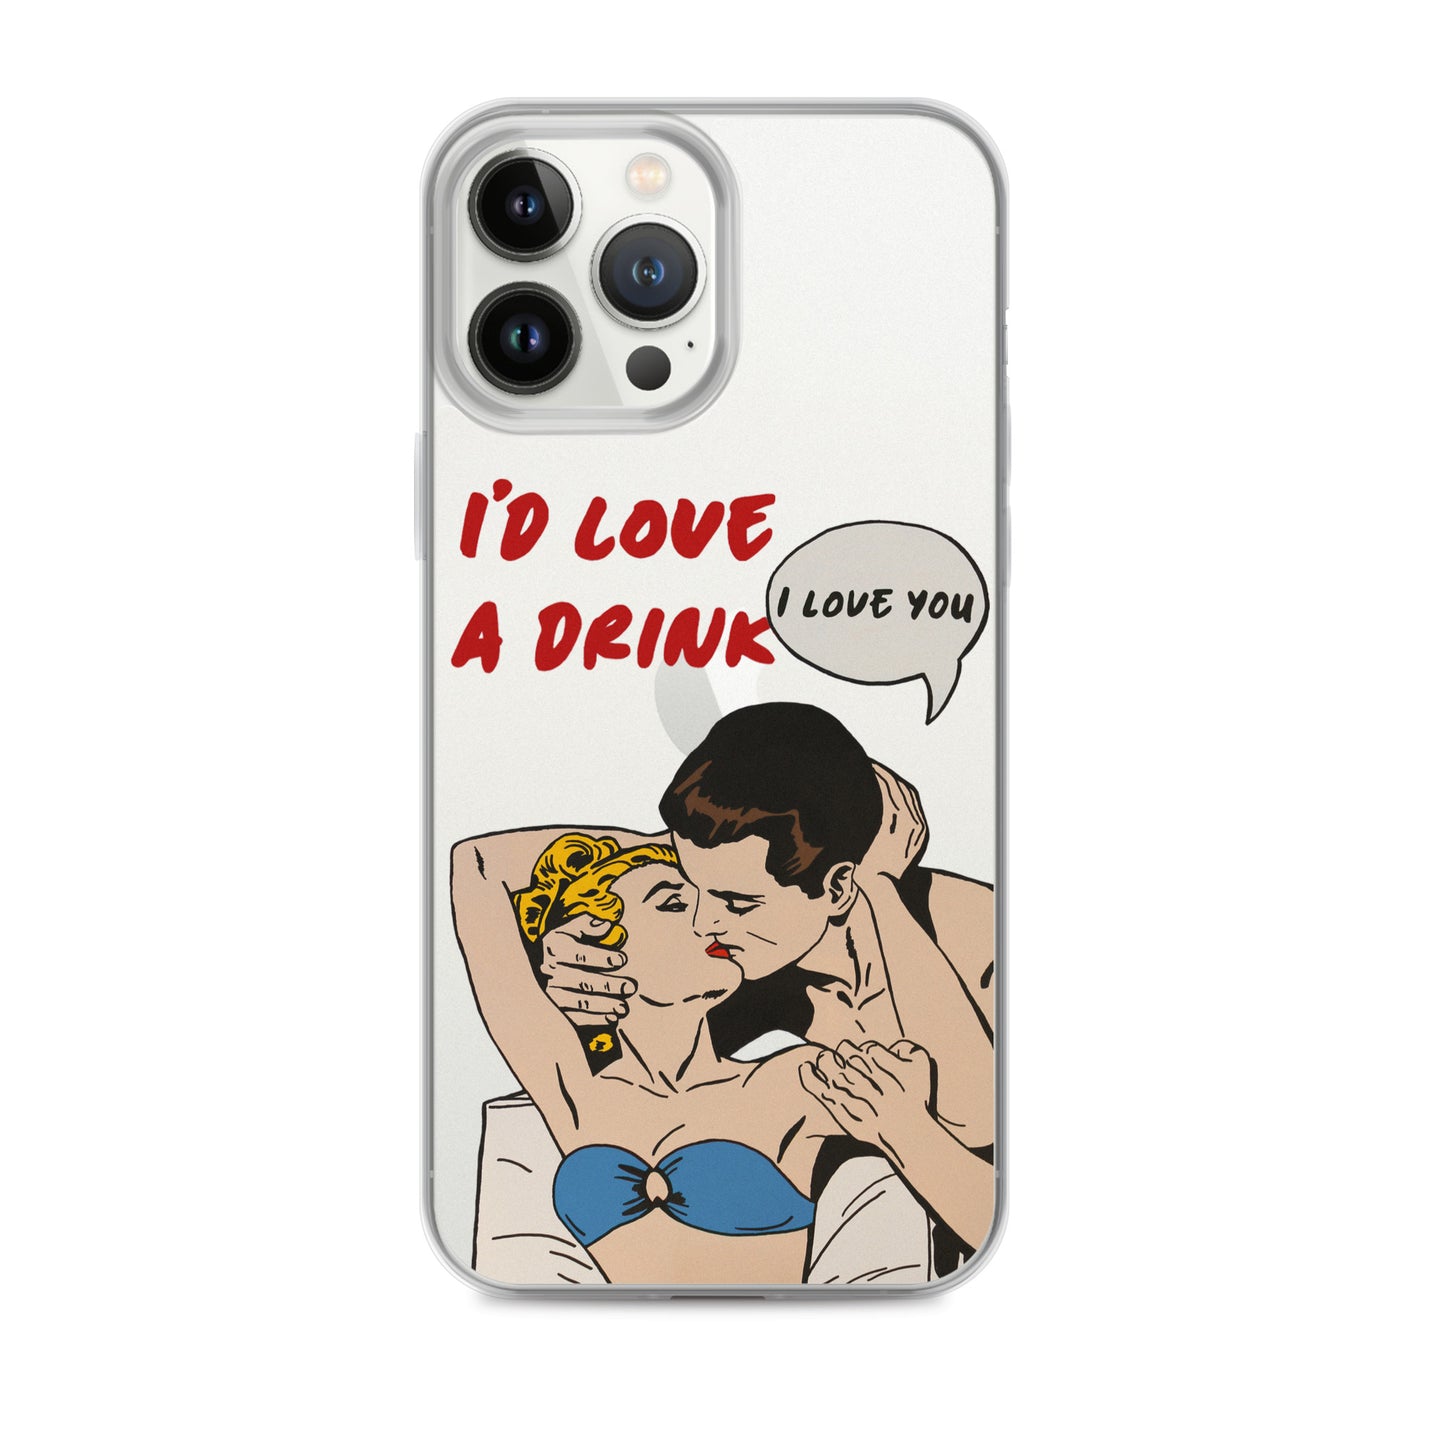 "I Love You" iPhone Case